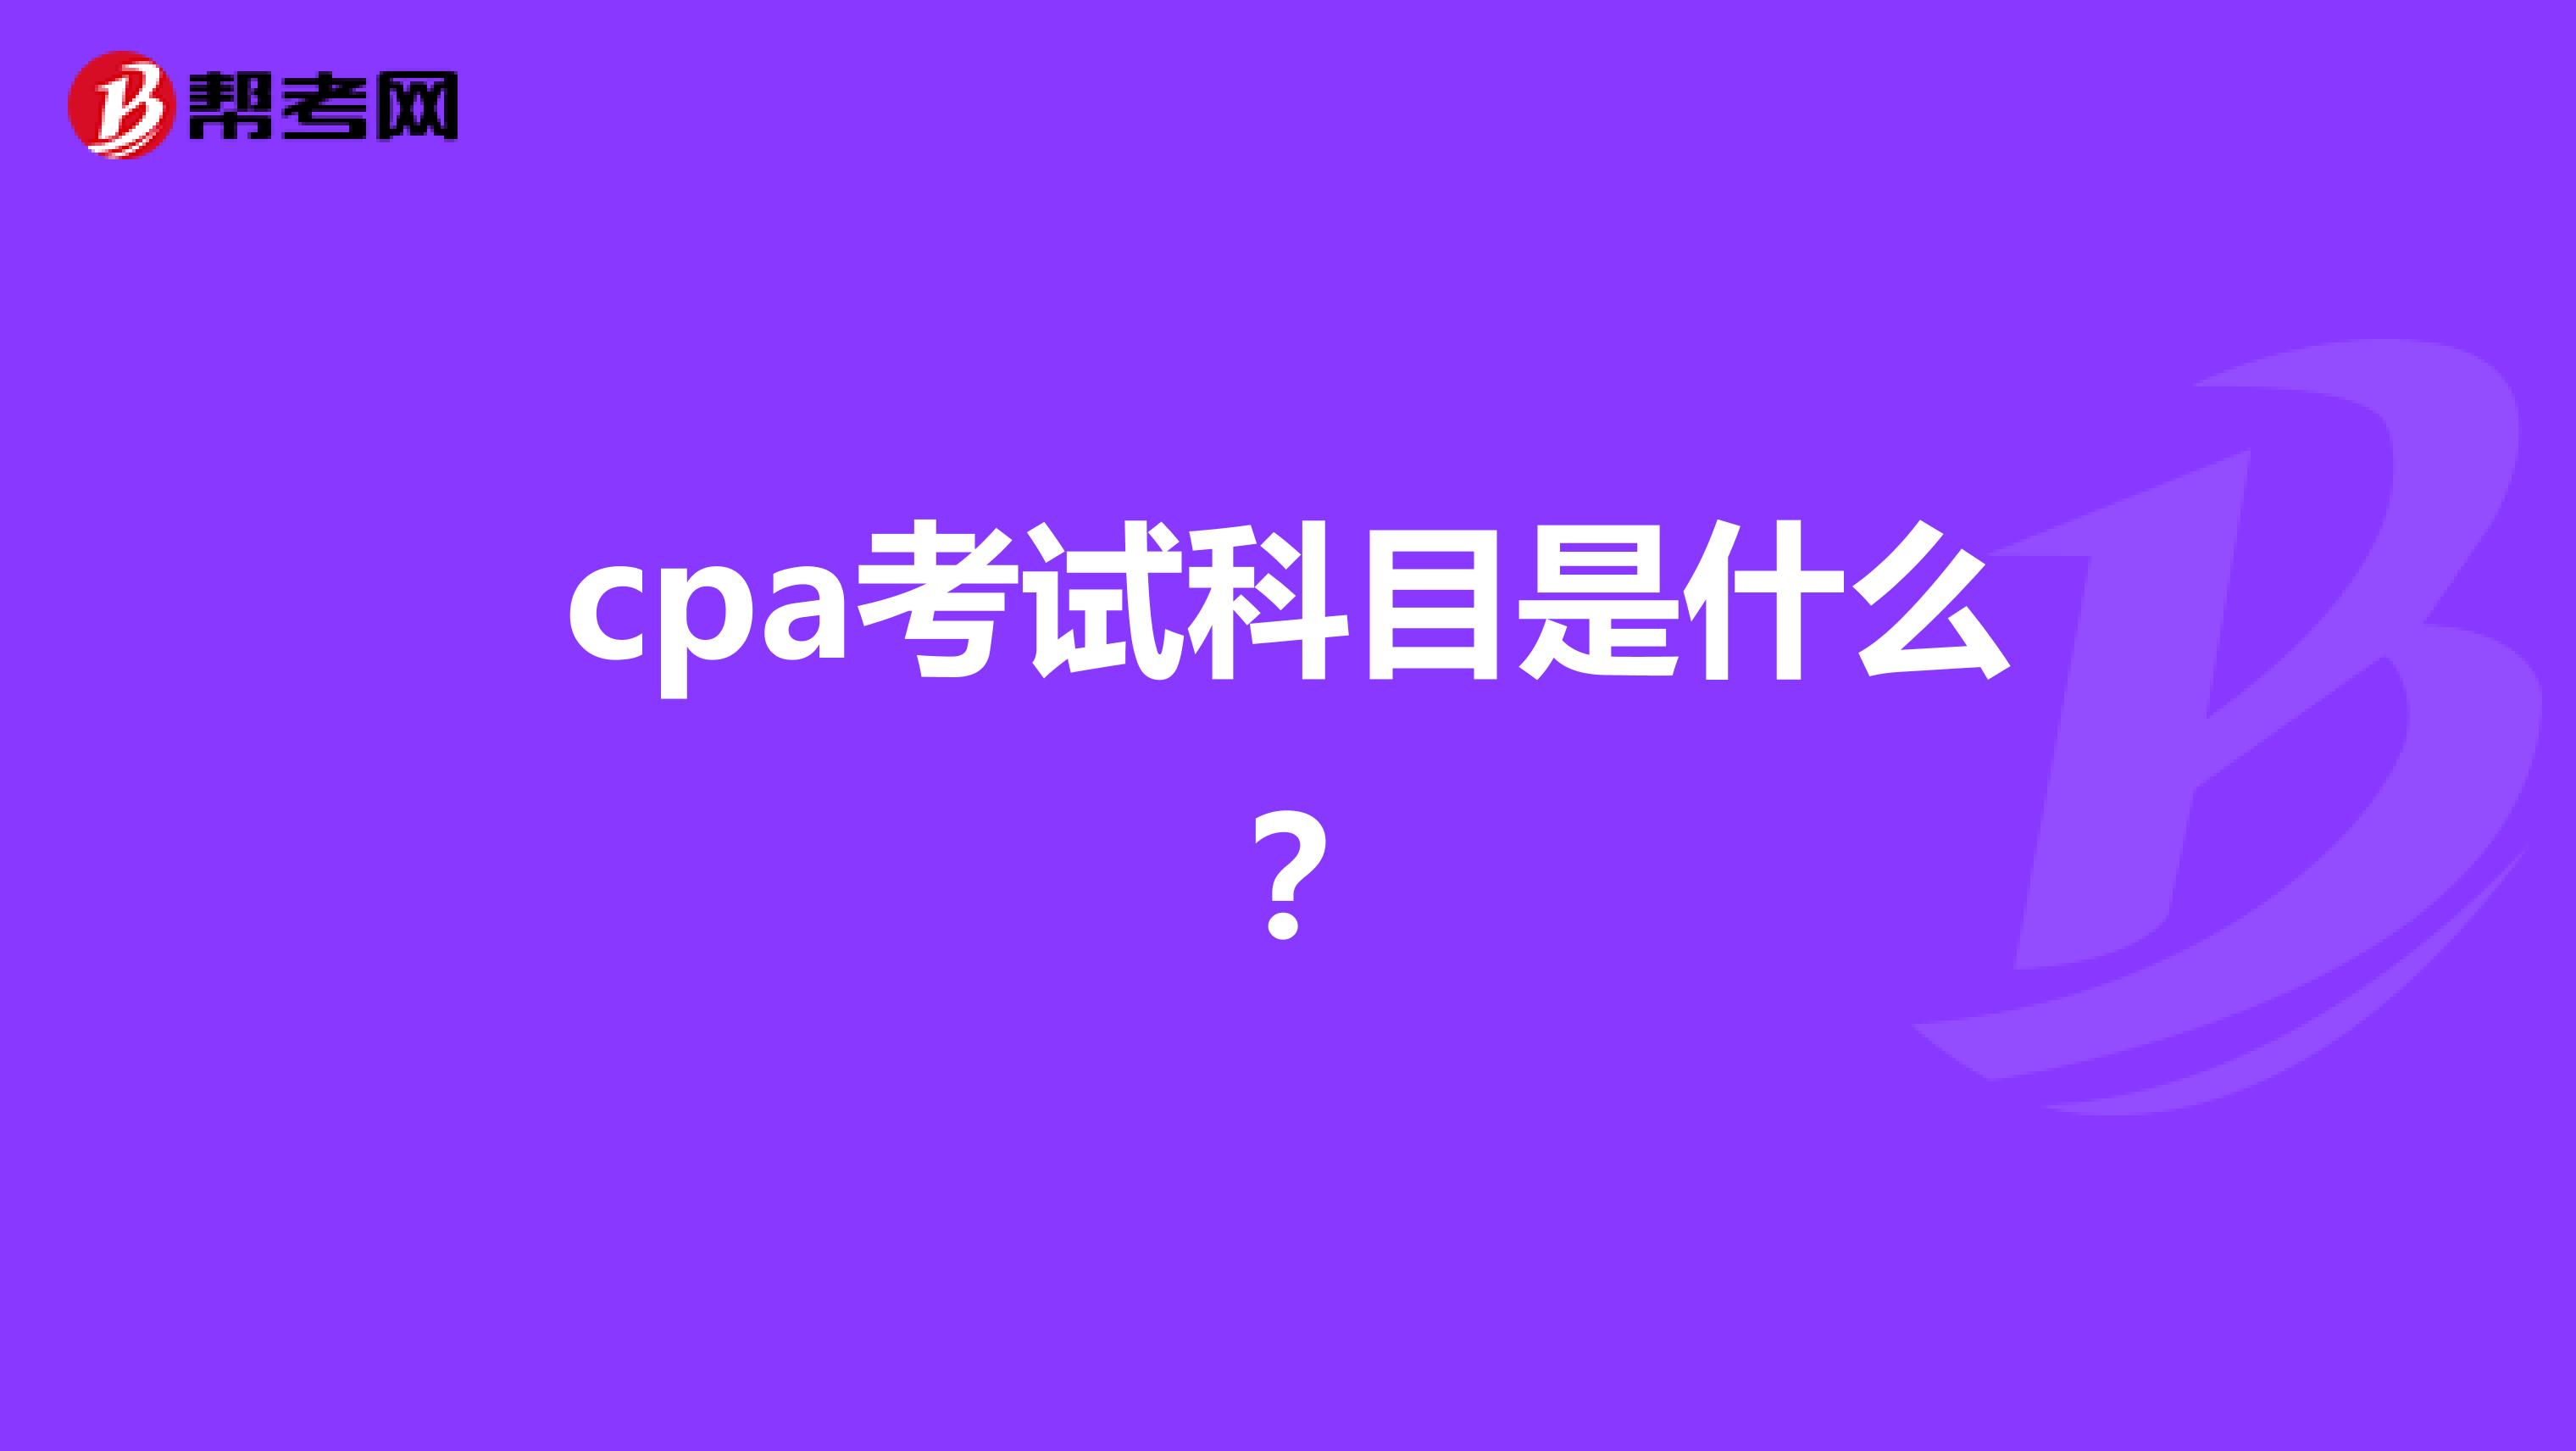 cpa考试科目是什么？